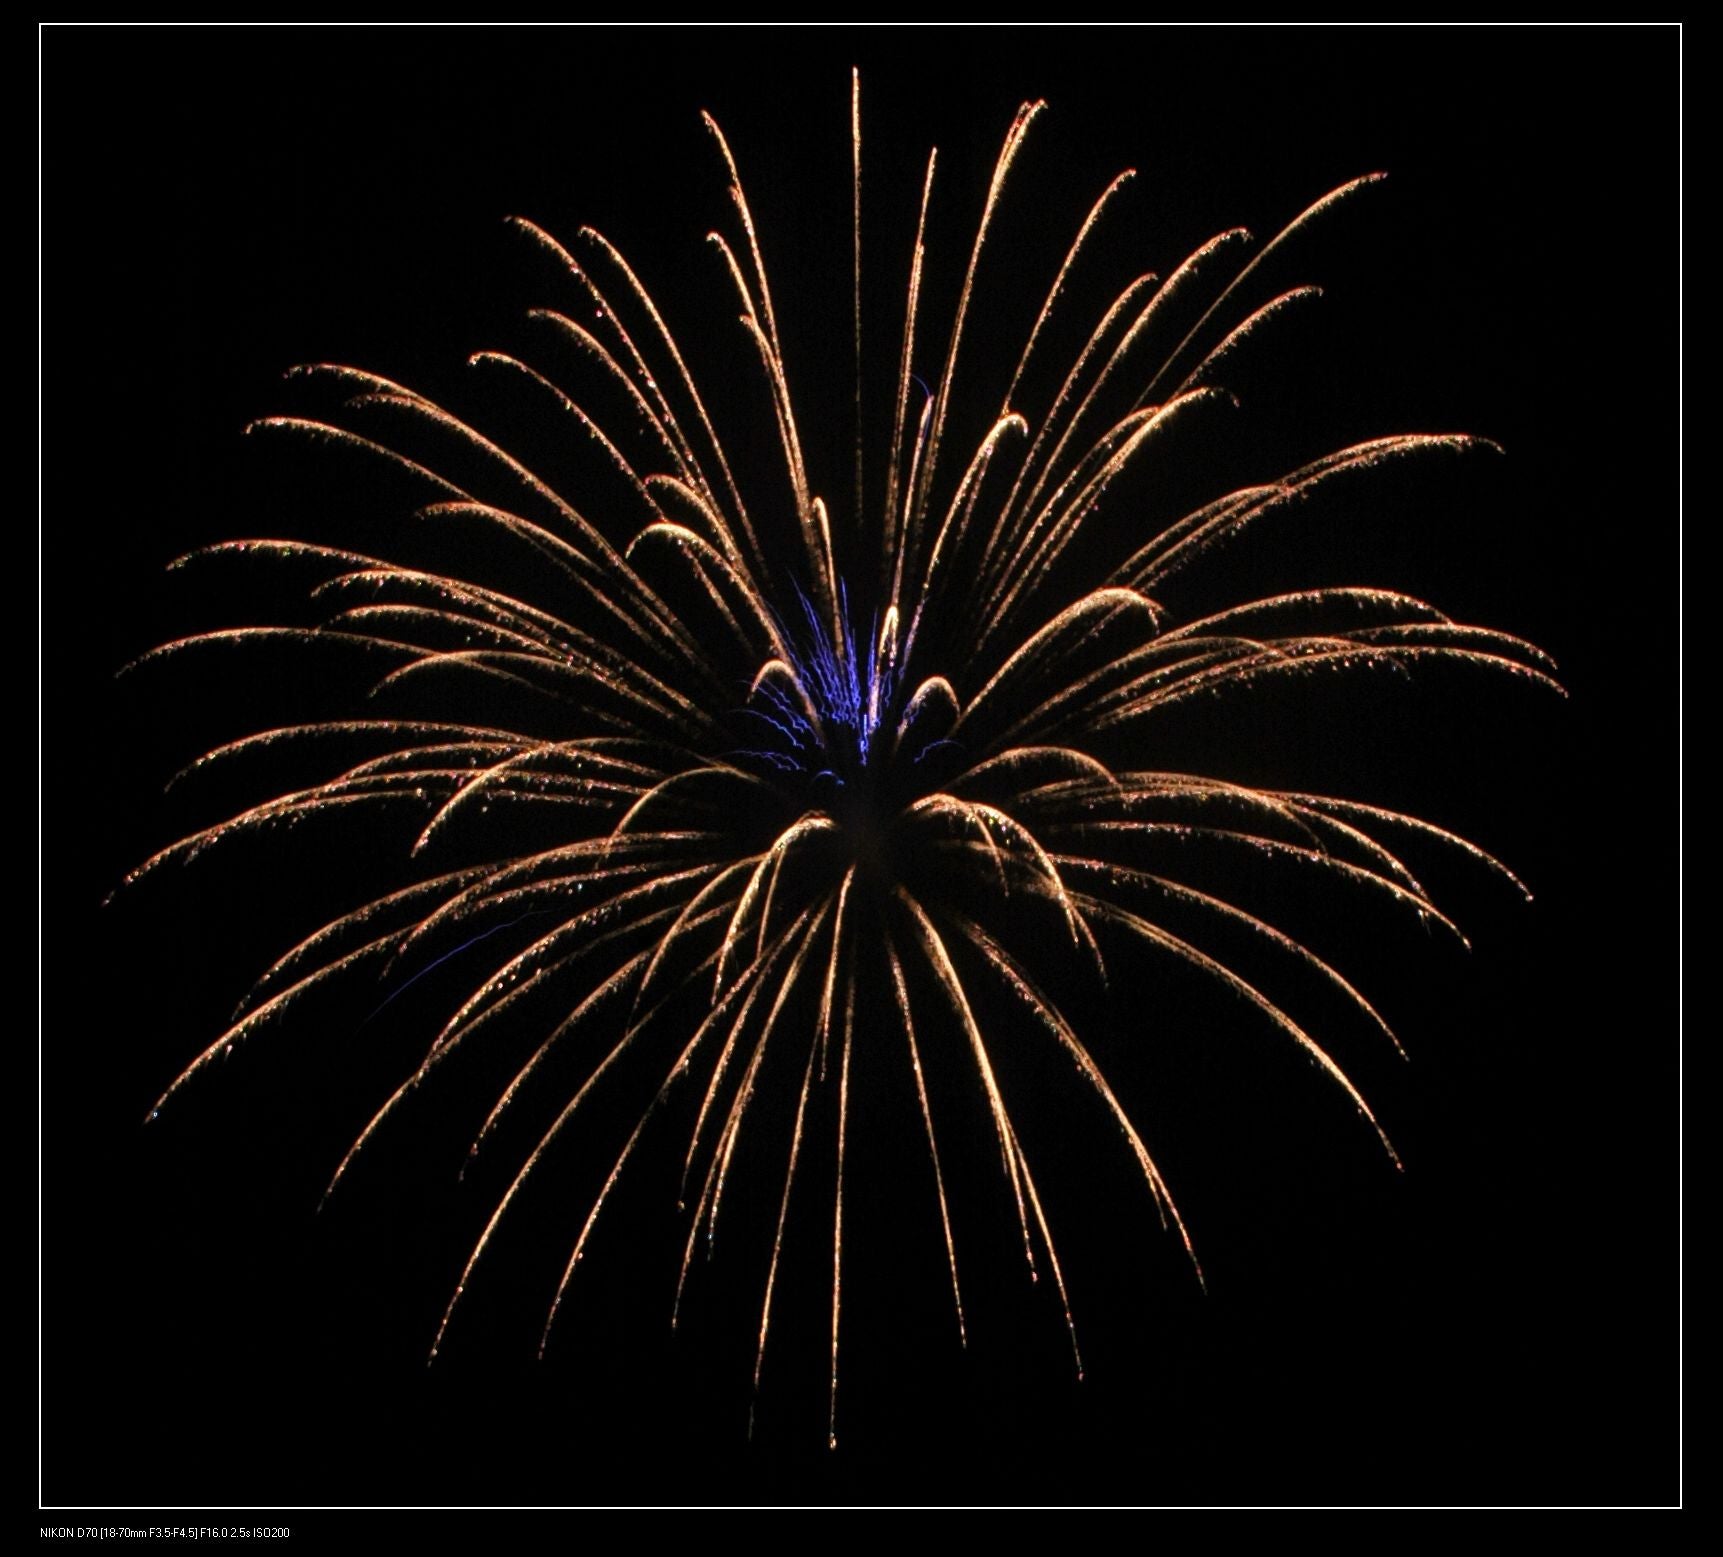 Tatton Park firework concert tickets go on sale